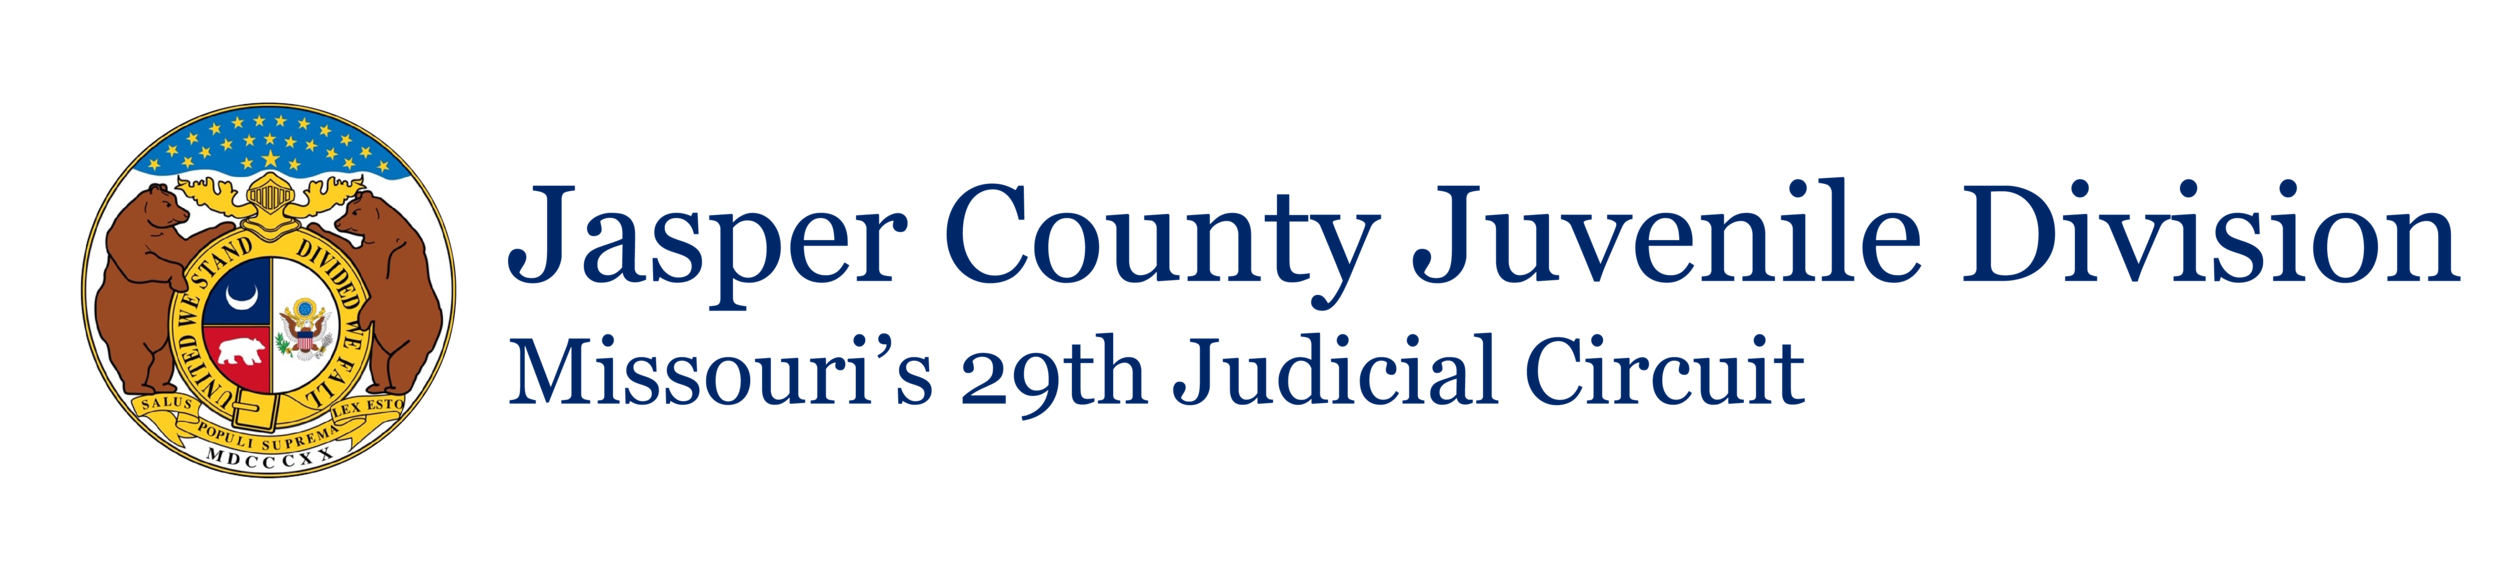 Jasper County Juvenile Division